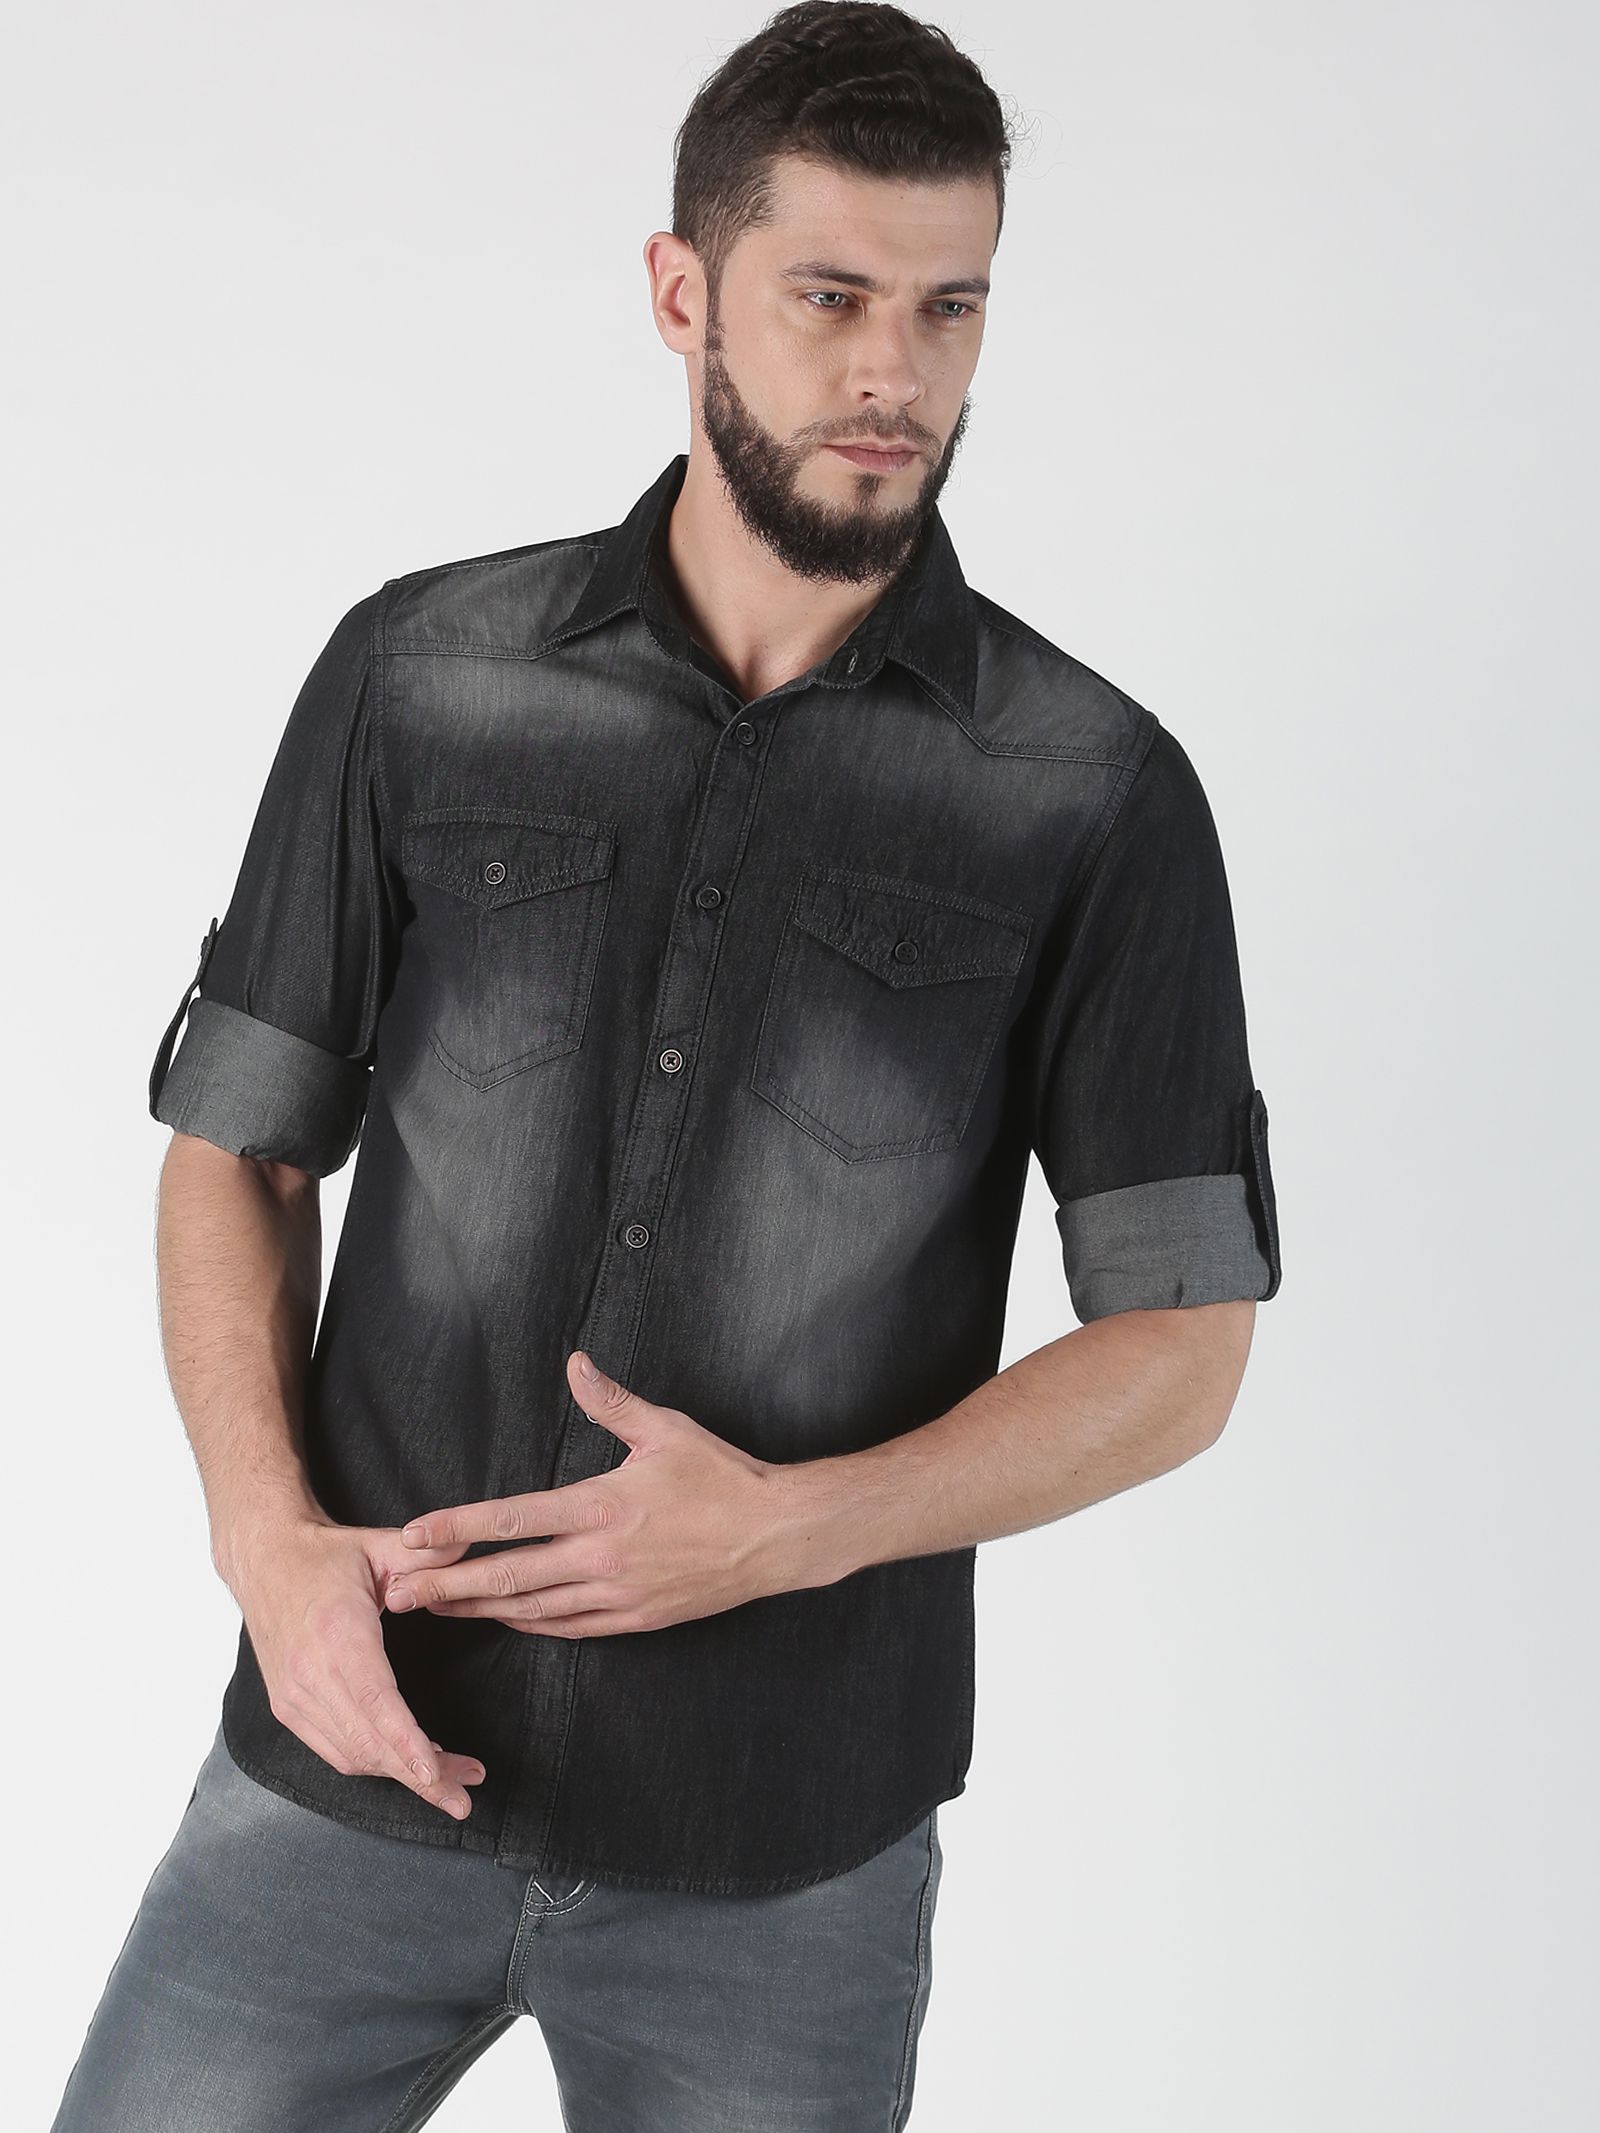     			OJASS Denim Regular Fit Self Design Rollup Sleeves Men's Casual Shirt - Black ( Pack of 1 )